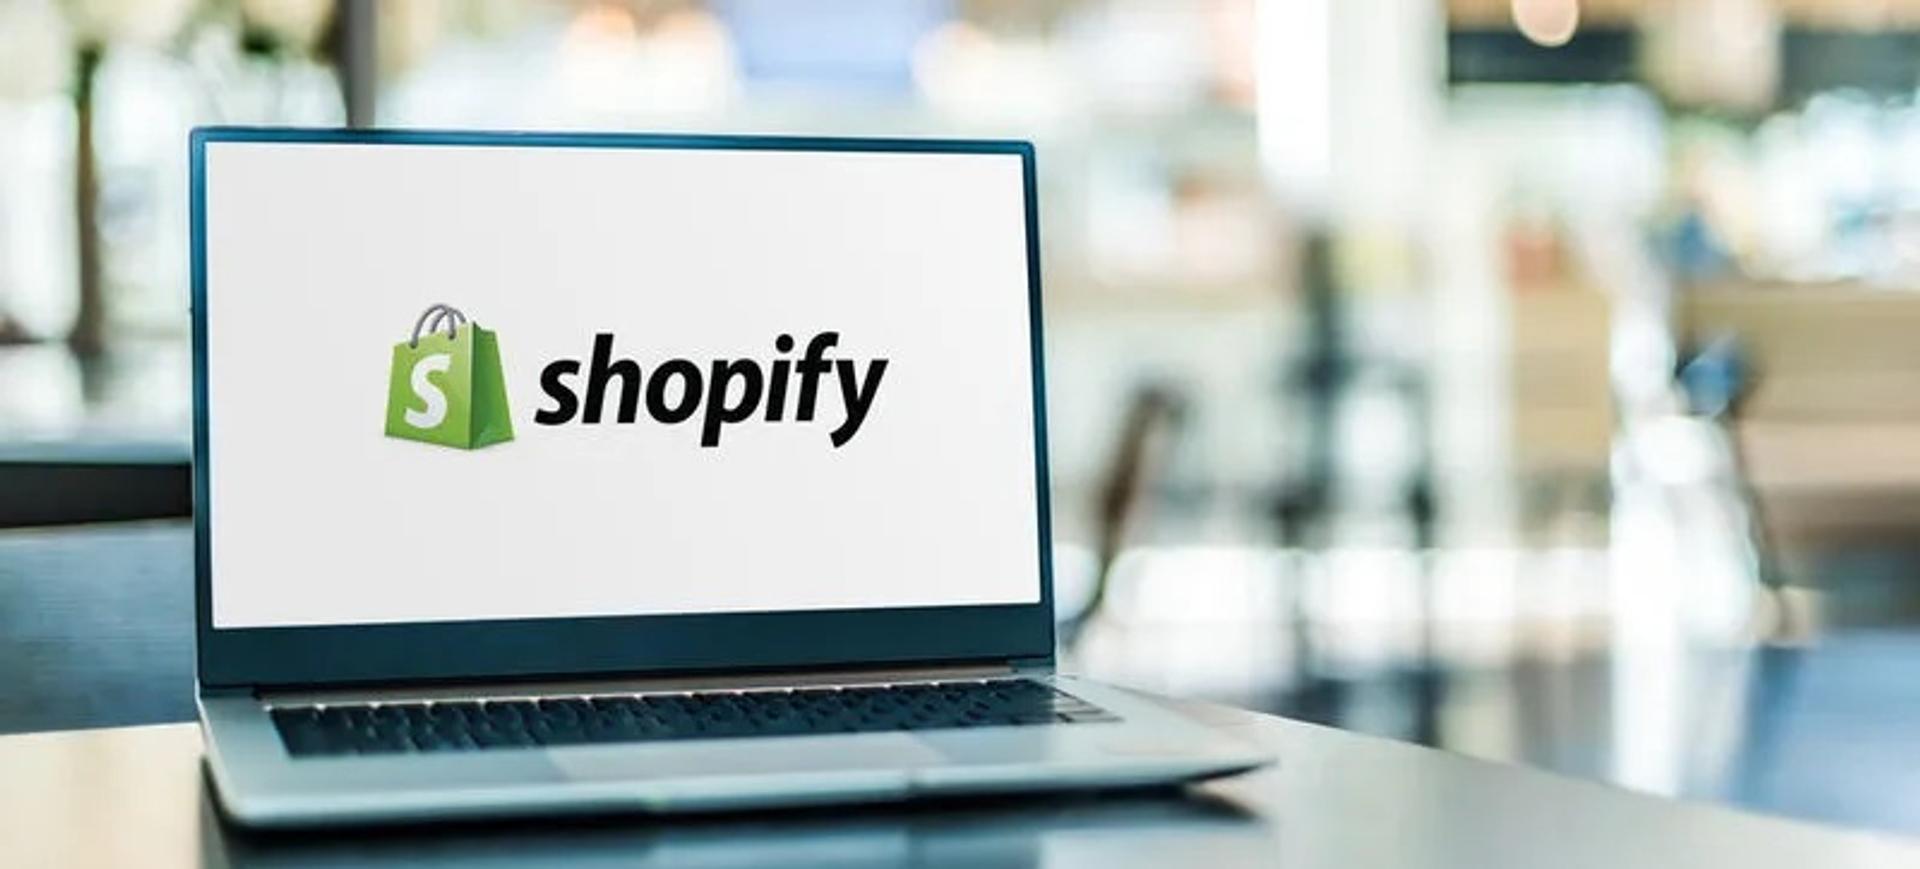 Shopify Logo on PC